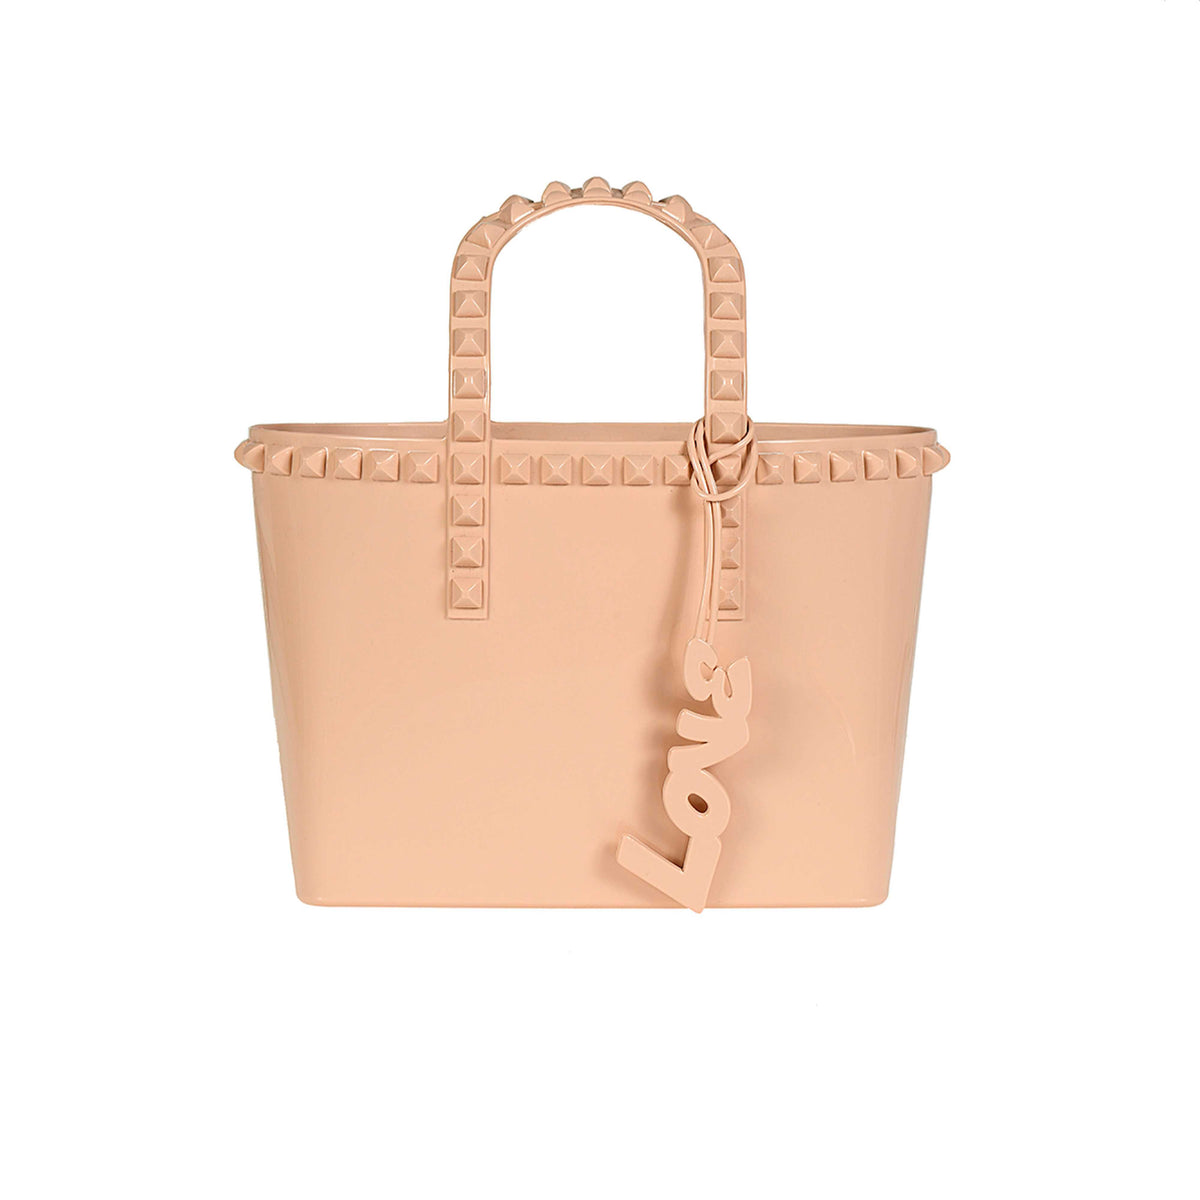 Mini Melissa bag from Carmen Sol in color blush